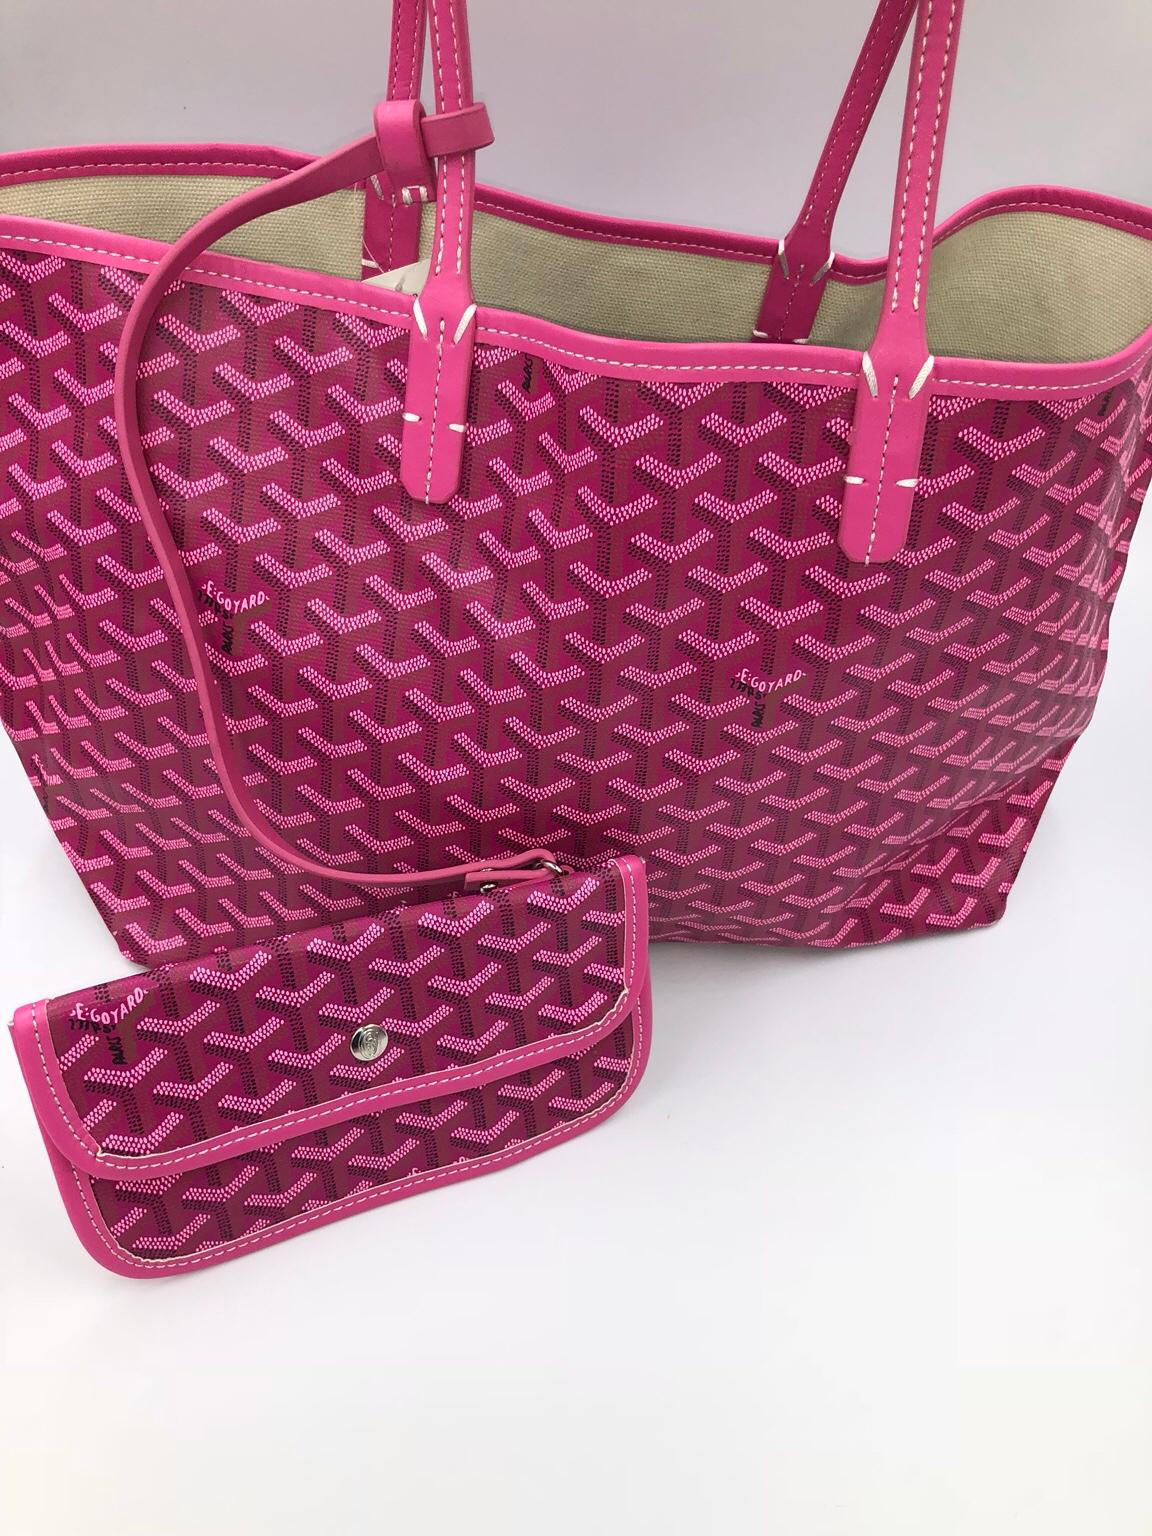 GOYARD Saint Louis Tote GM in Hot Pink 😍, Luxury, Bags & Wallets